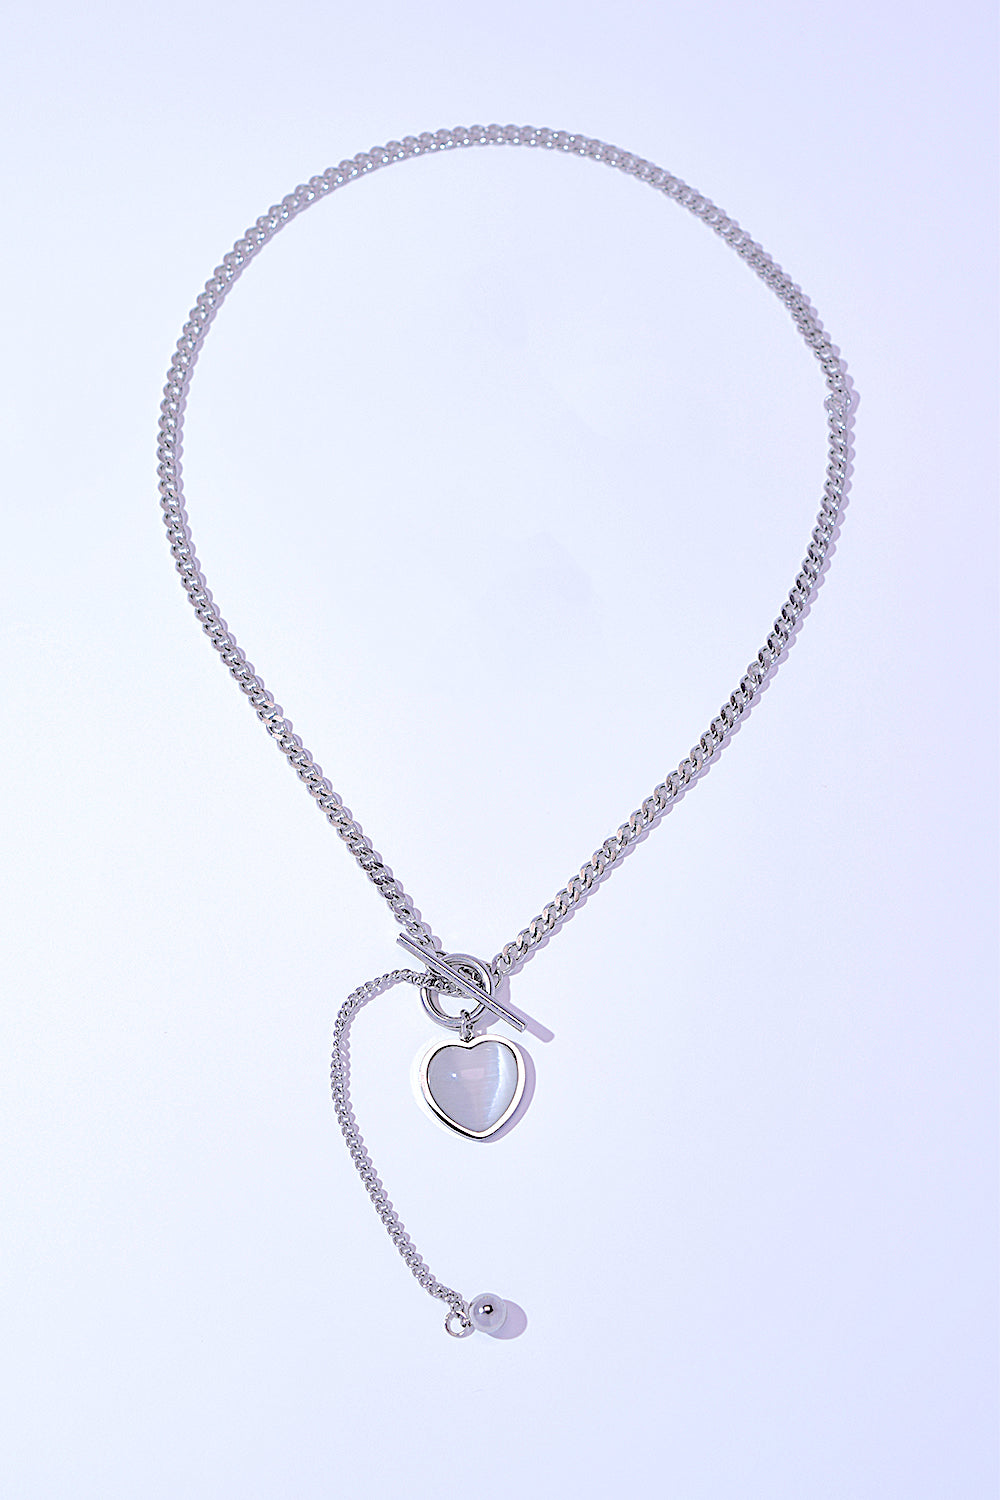 Titanium Steel Heart Necklace - Tigbul's Variety Fashion Shop